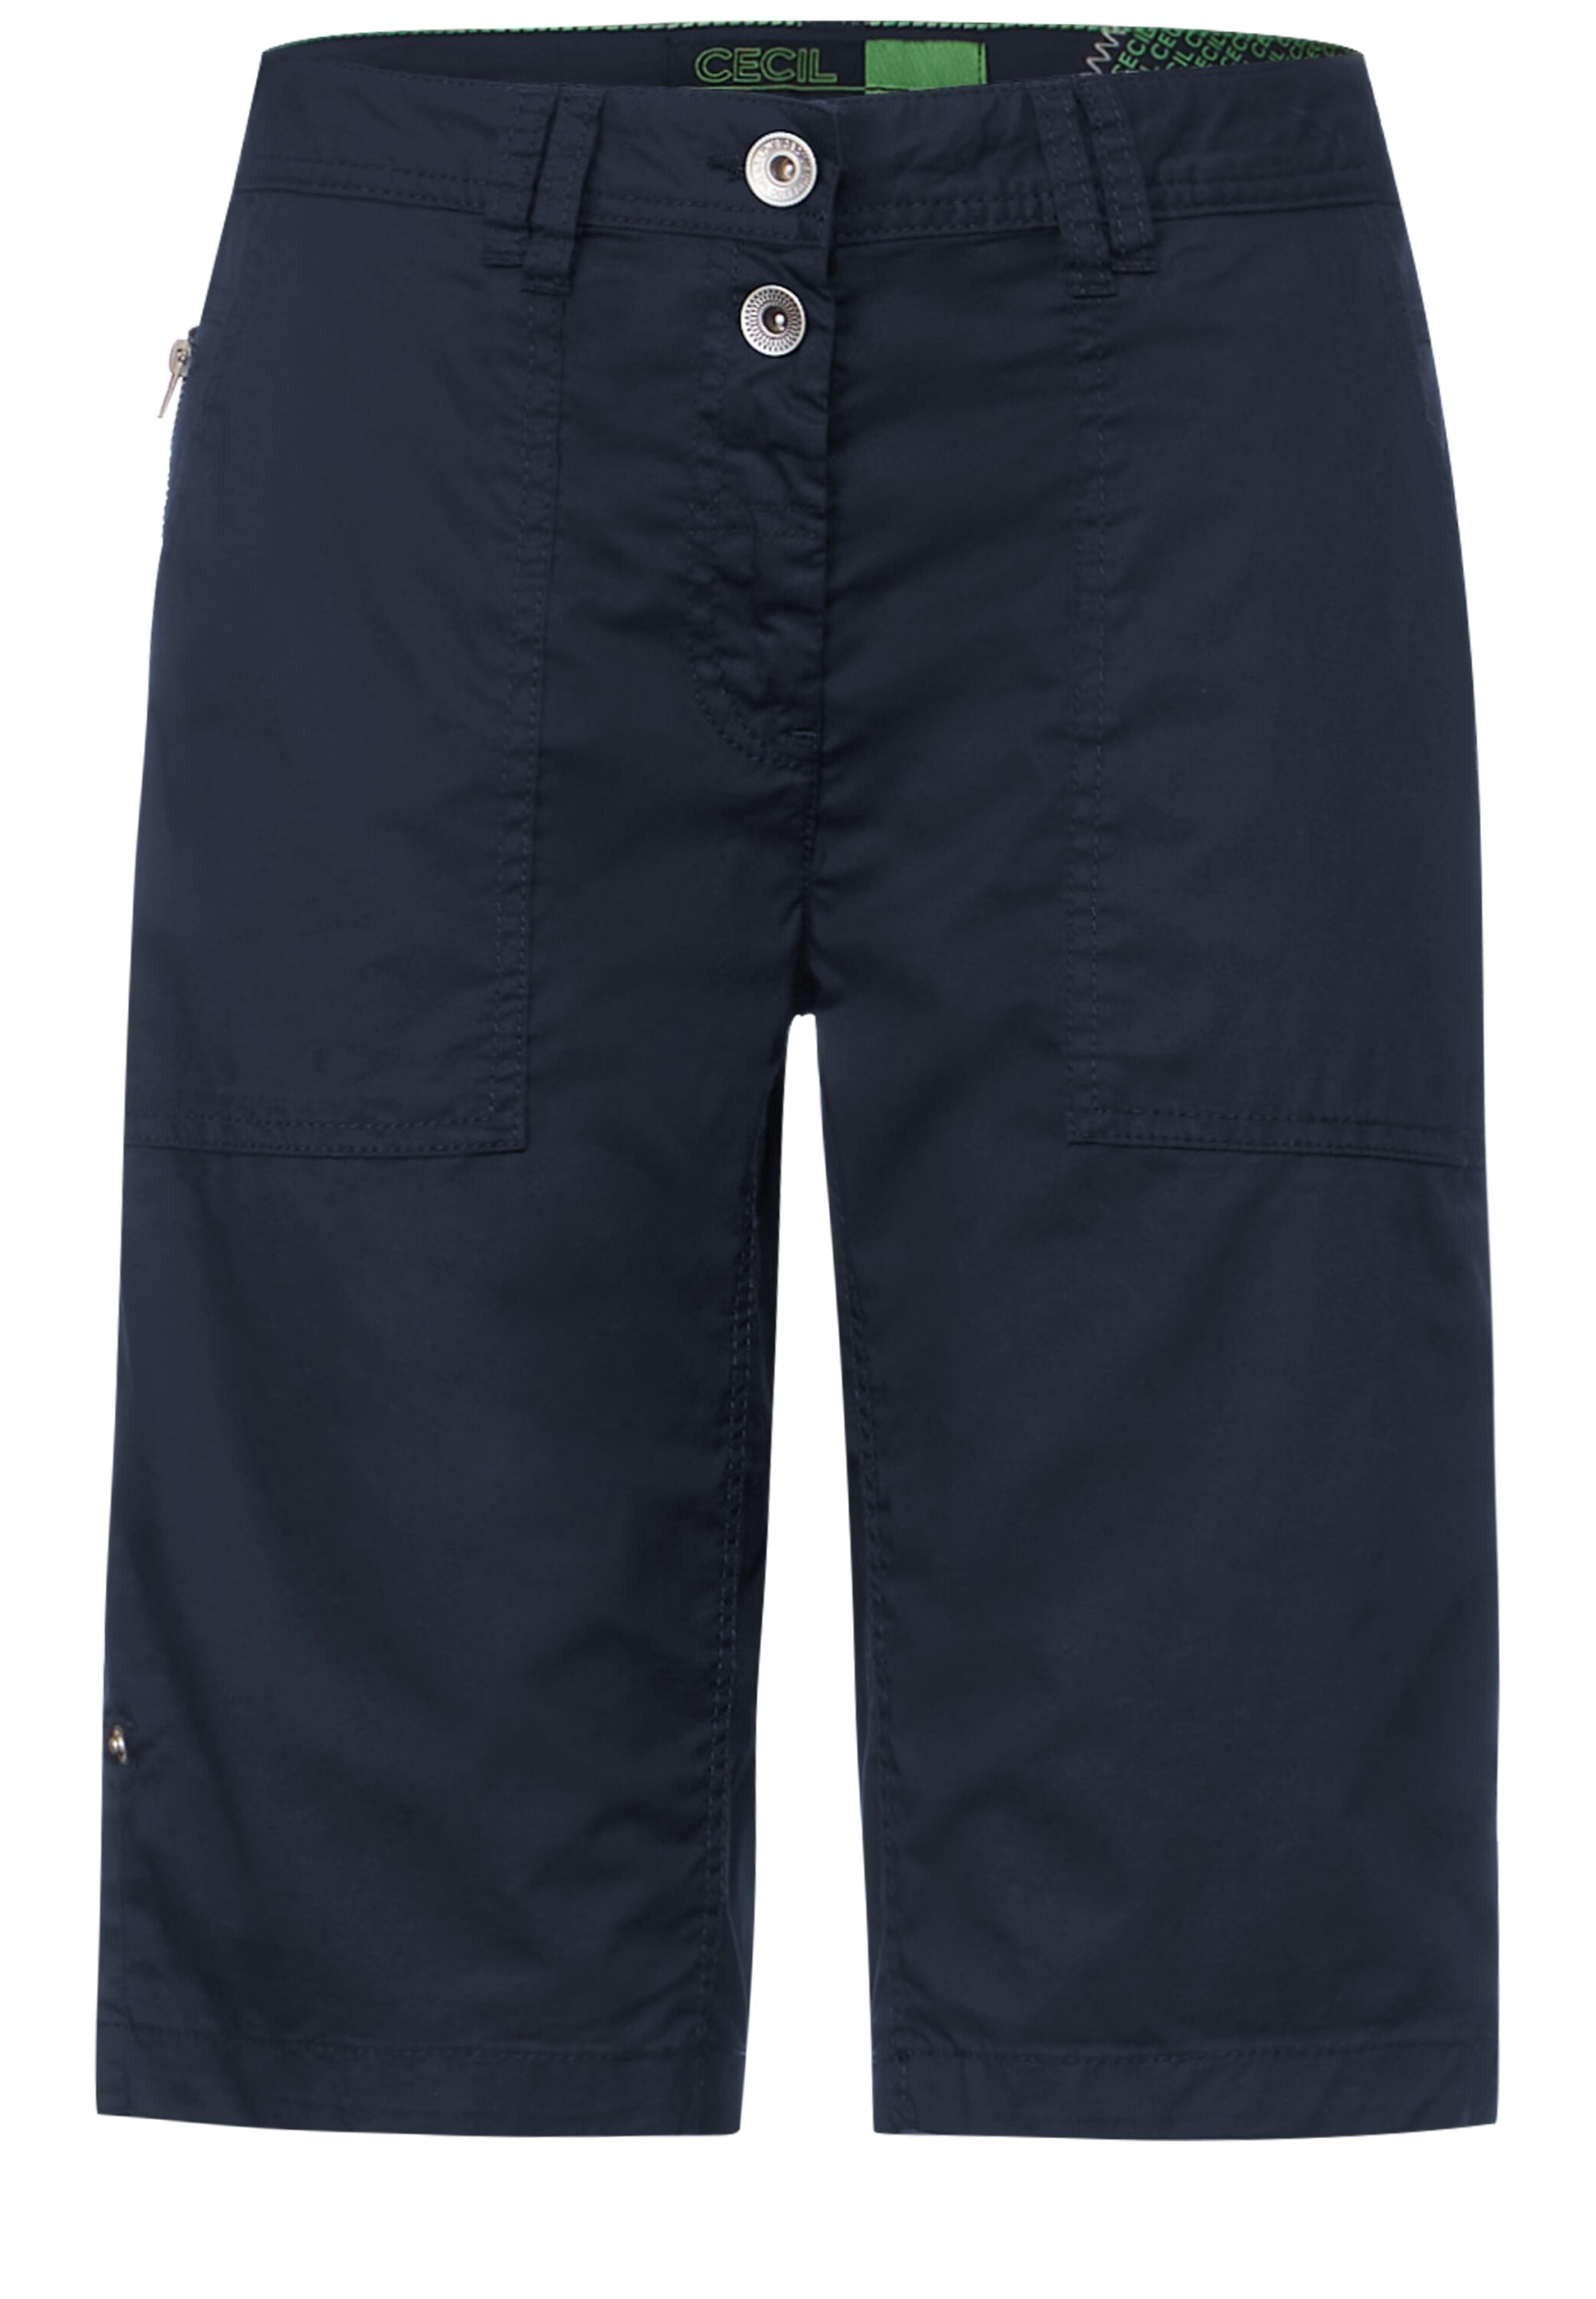 deep New | | NOS Shorts | Style 33 blue B376478-10128-33 York